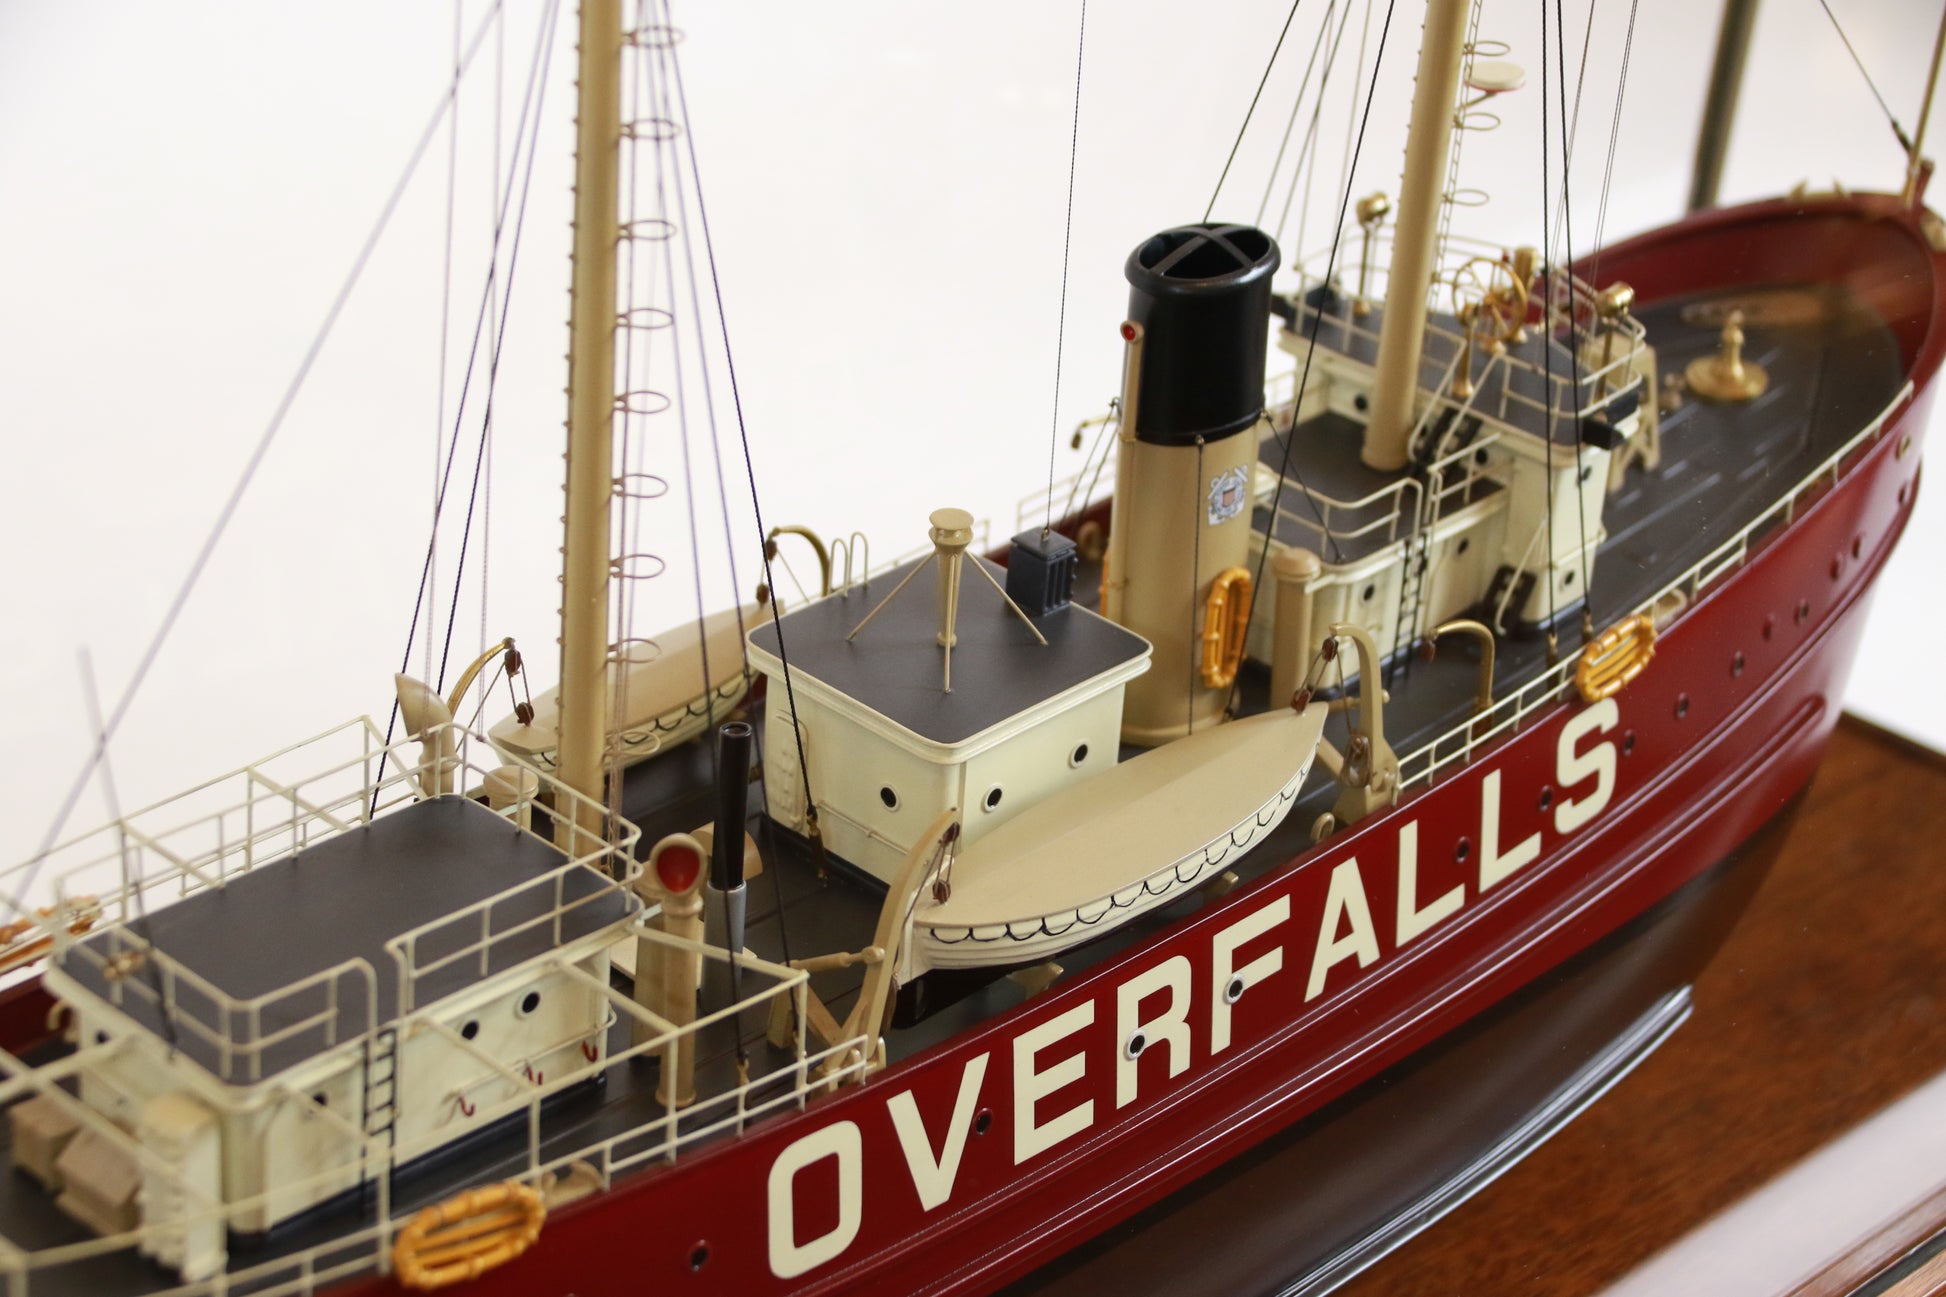 Coast Guard Vessel "Overfalls" - Lannan Gallery